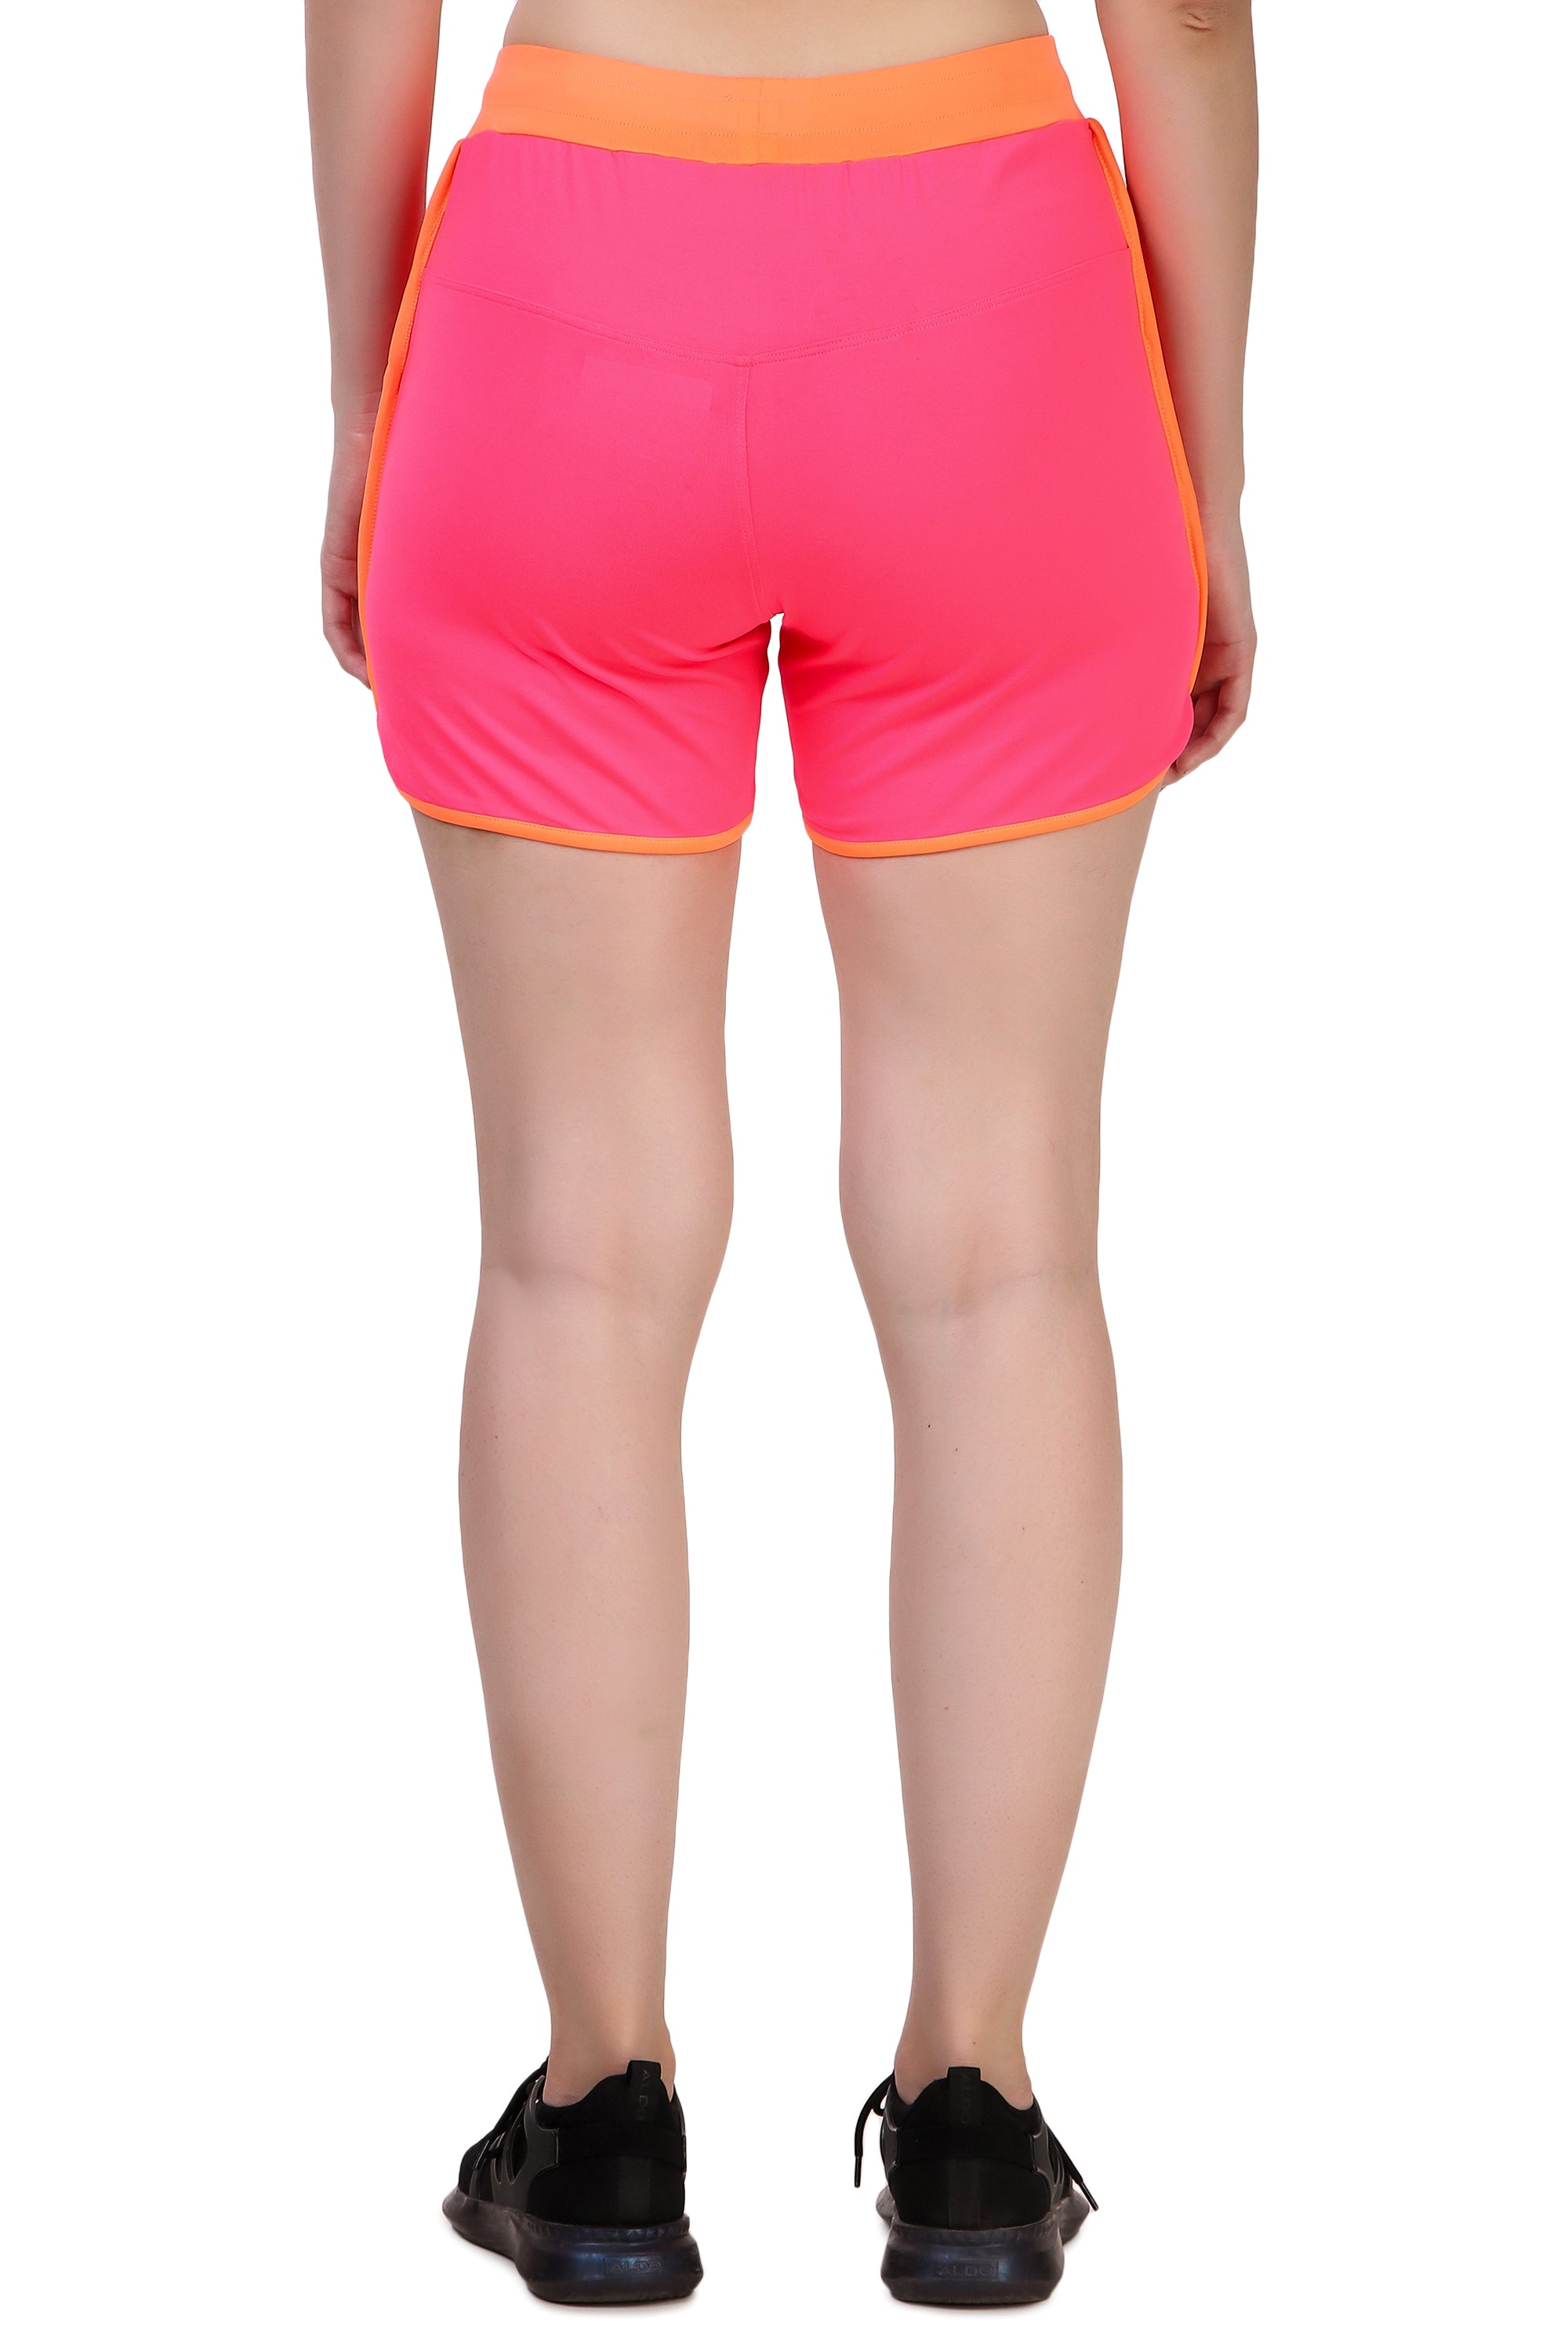 Gym & Running Shorts For Women (Neon Pink)